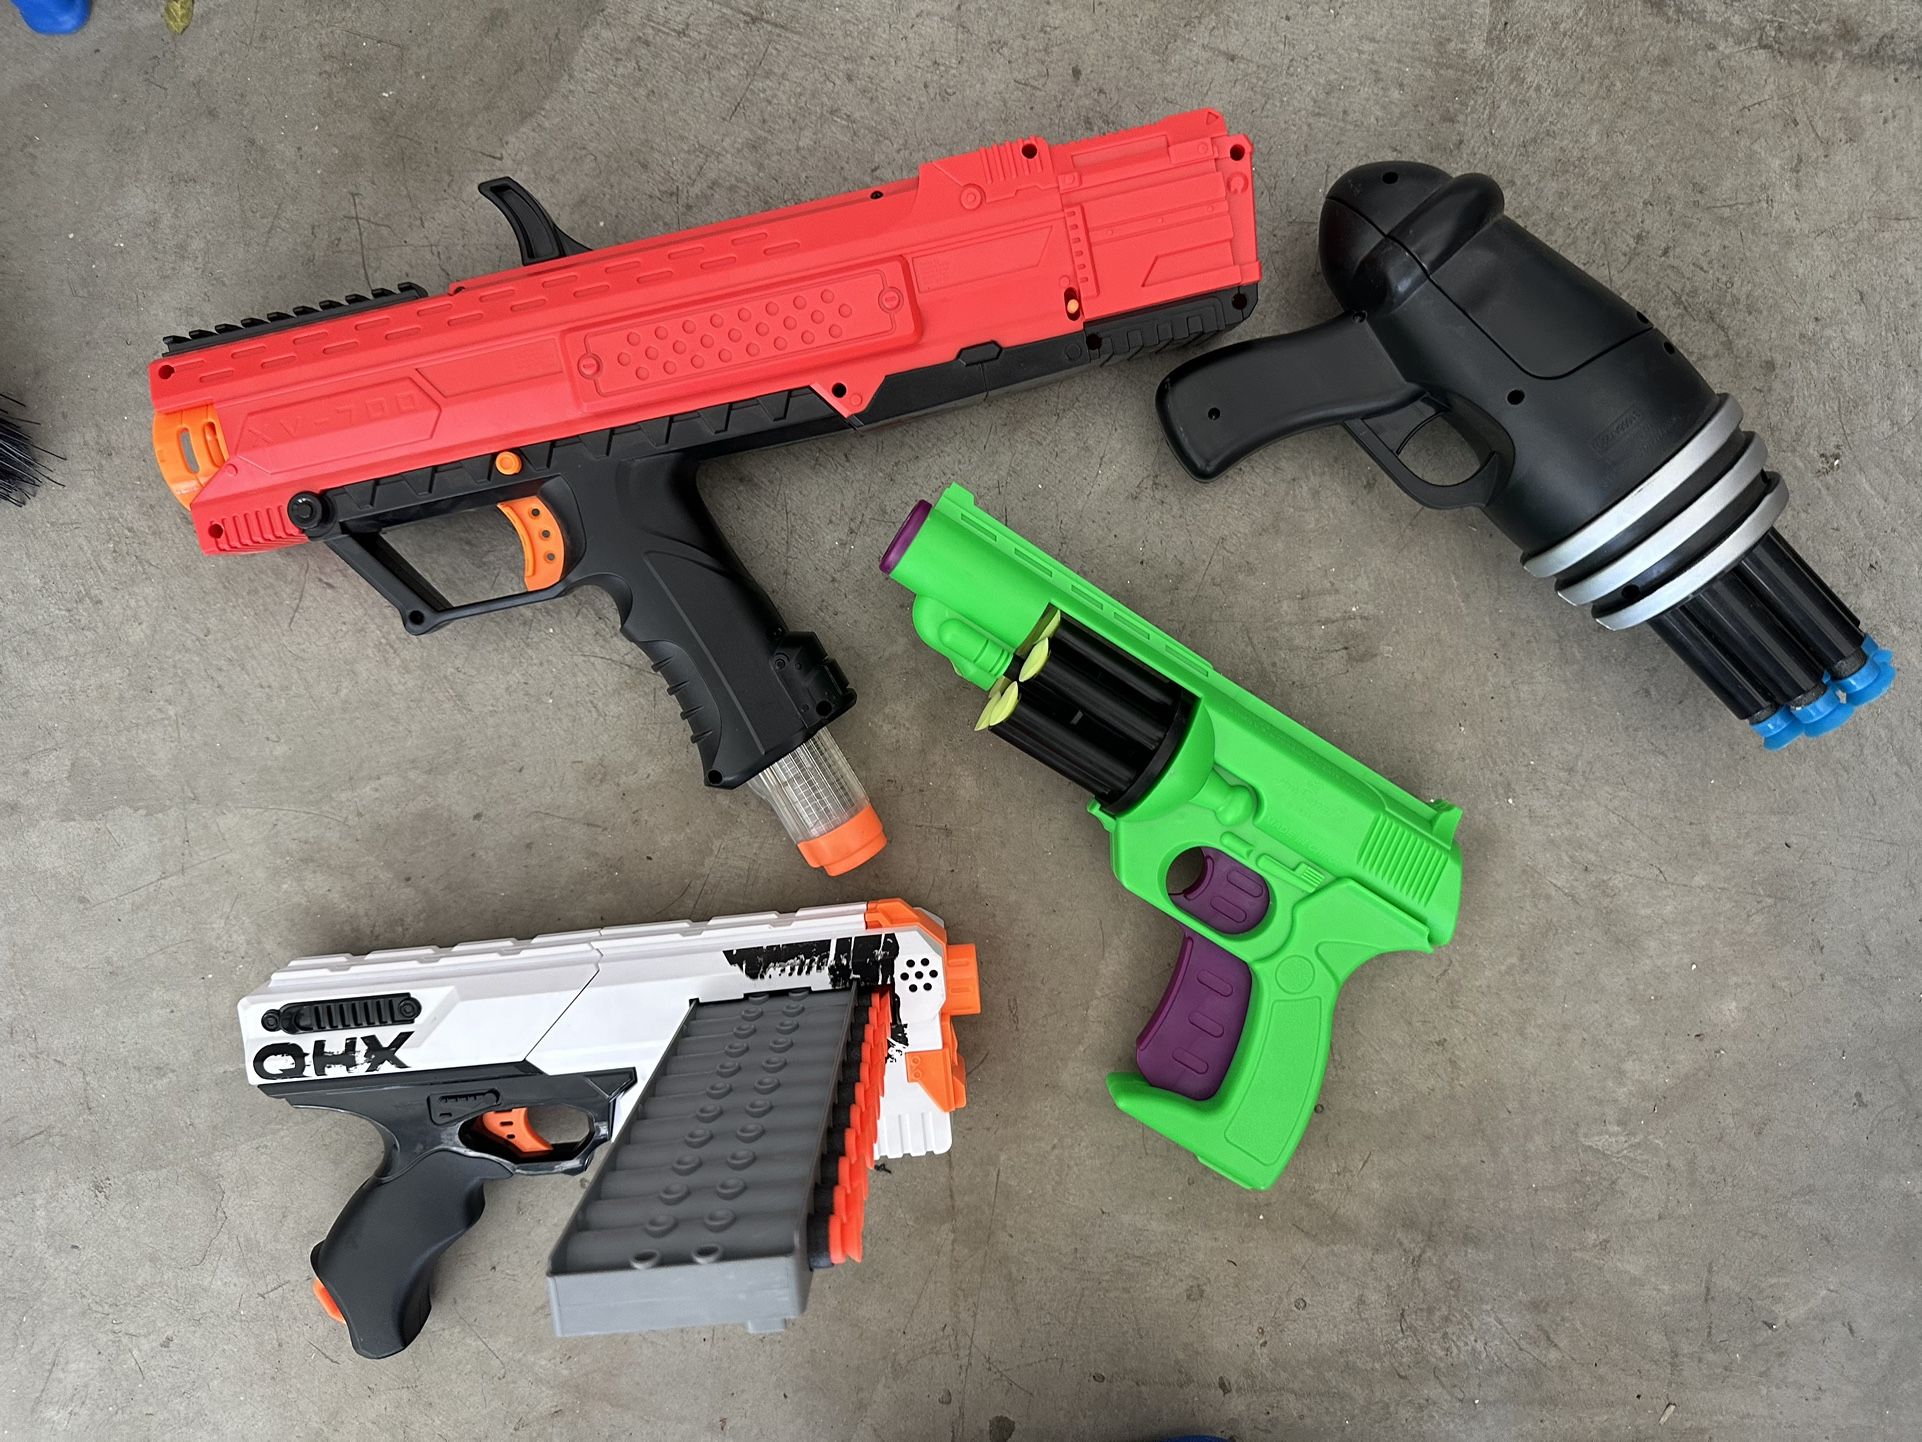 Nerf Imperial QHX Dart Toy Gun Lot Of 4